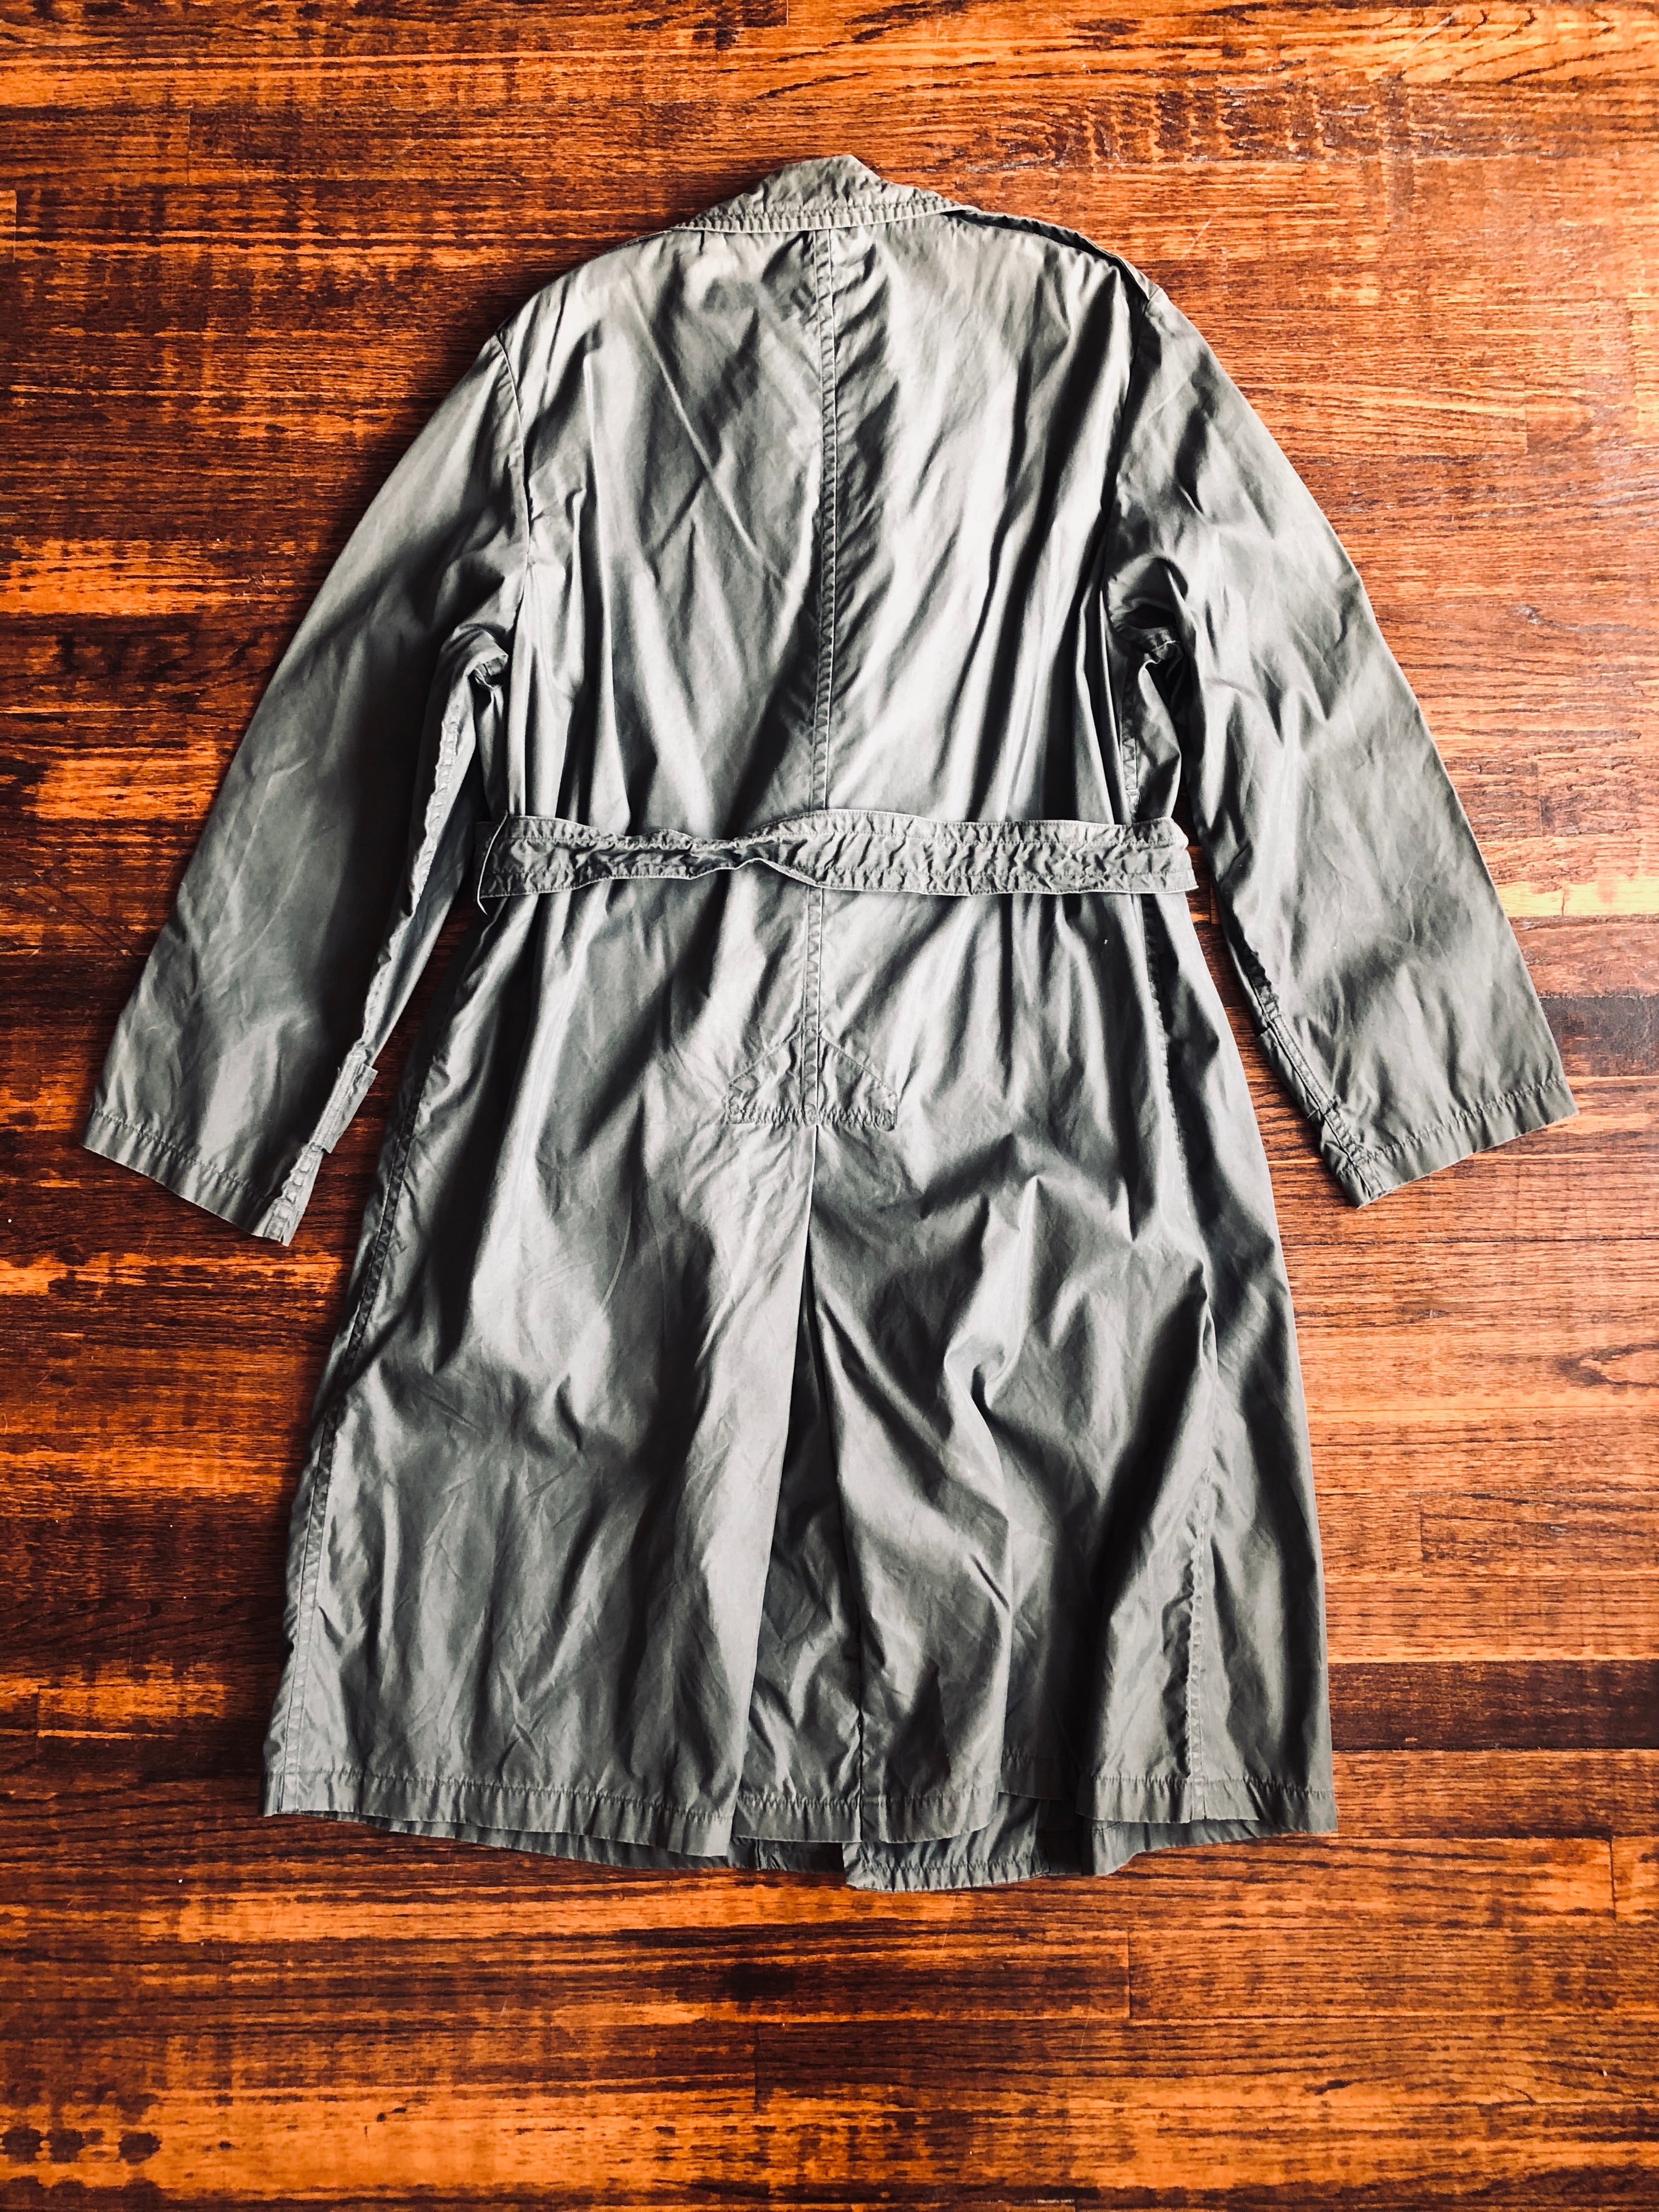 1967 US Army Raincoat